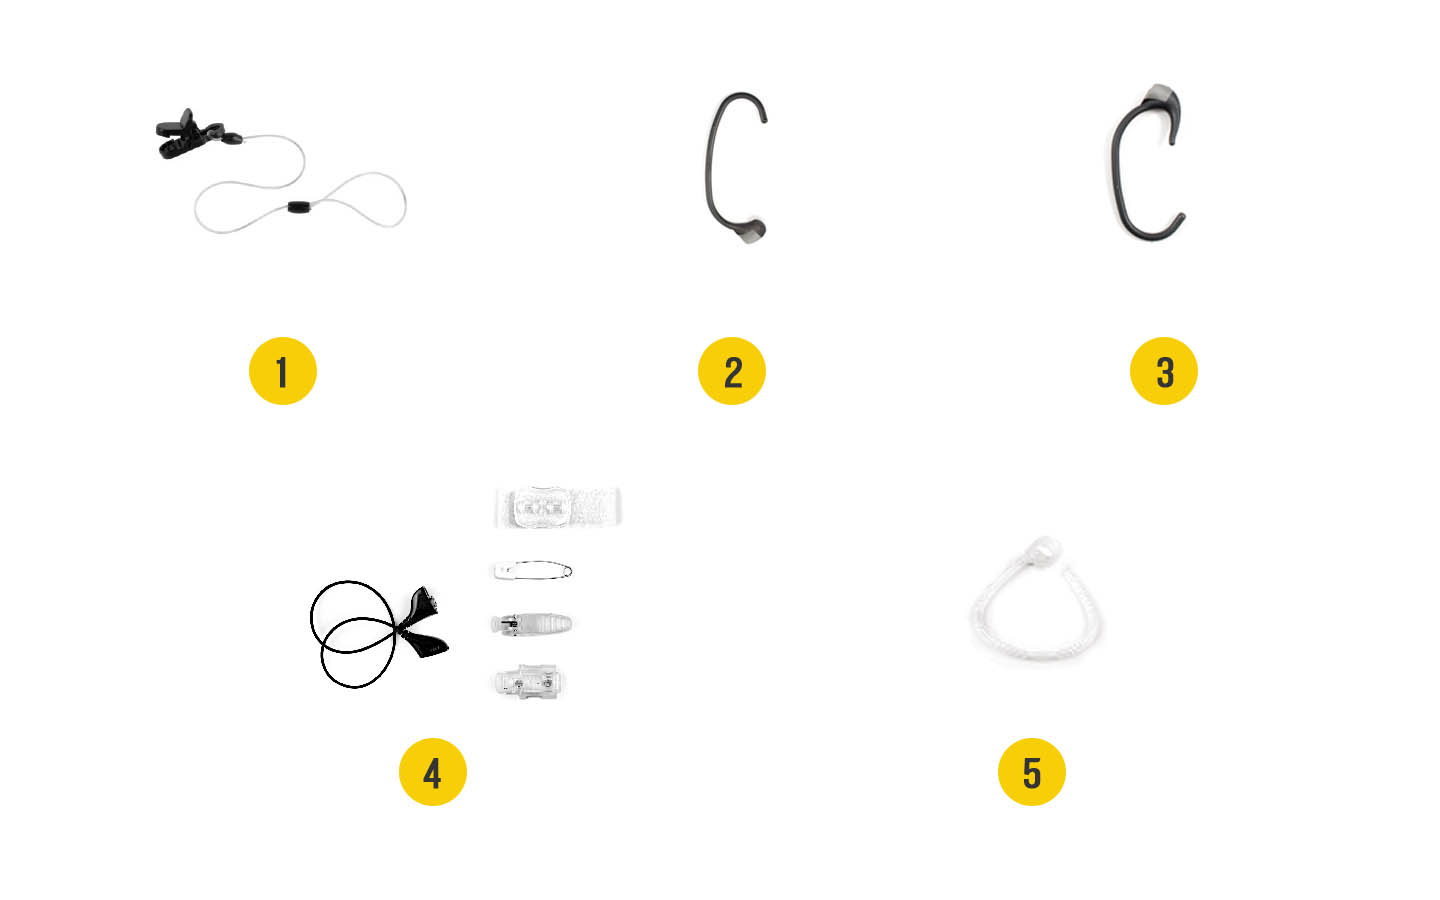 Afbeelding van de accessoires voor de Baha-geluidsprocessor: 1. Krokodillenklem met lang veiligheidskoordje, 2. Oorhaak+, 3. Snugfit, 4. Litewear, 5. Mic lock